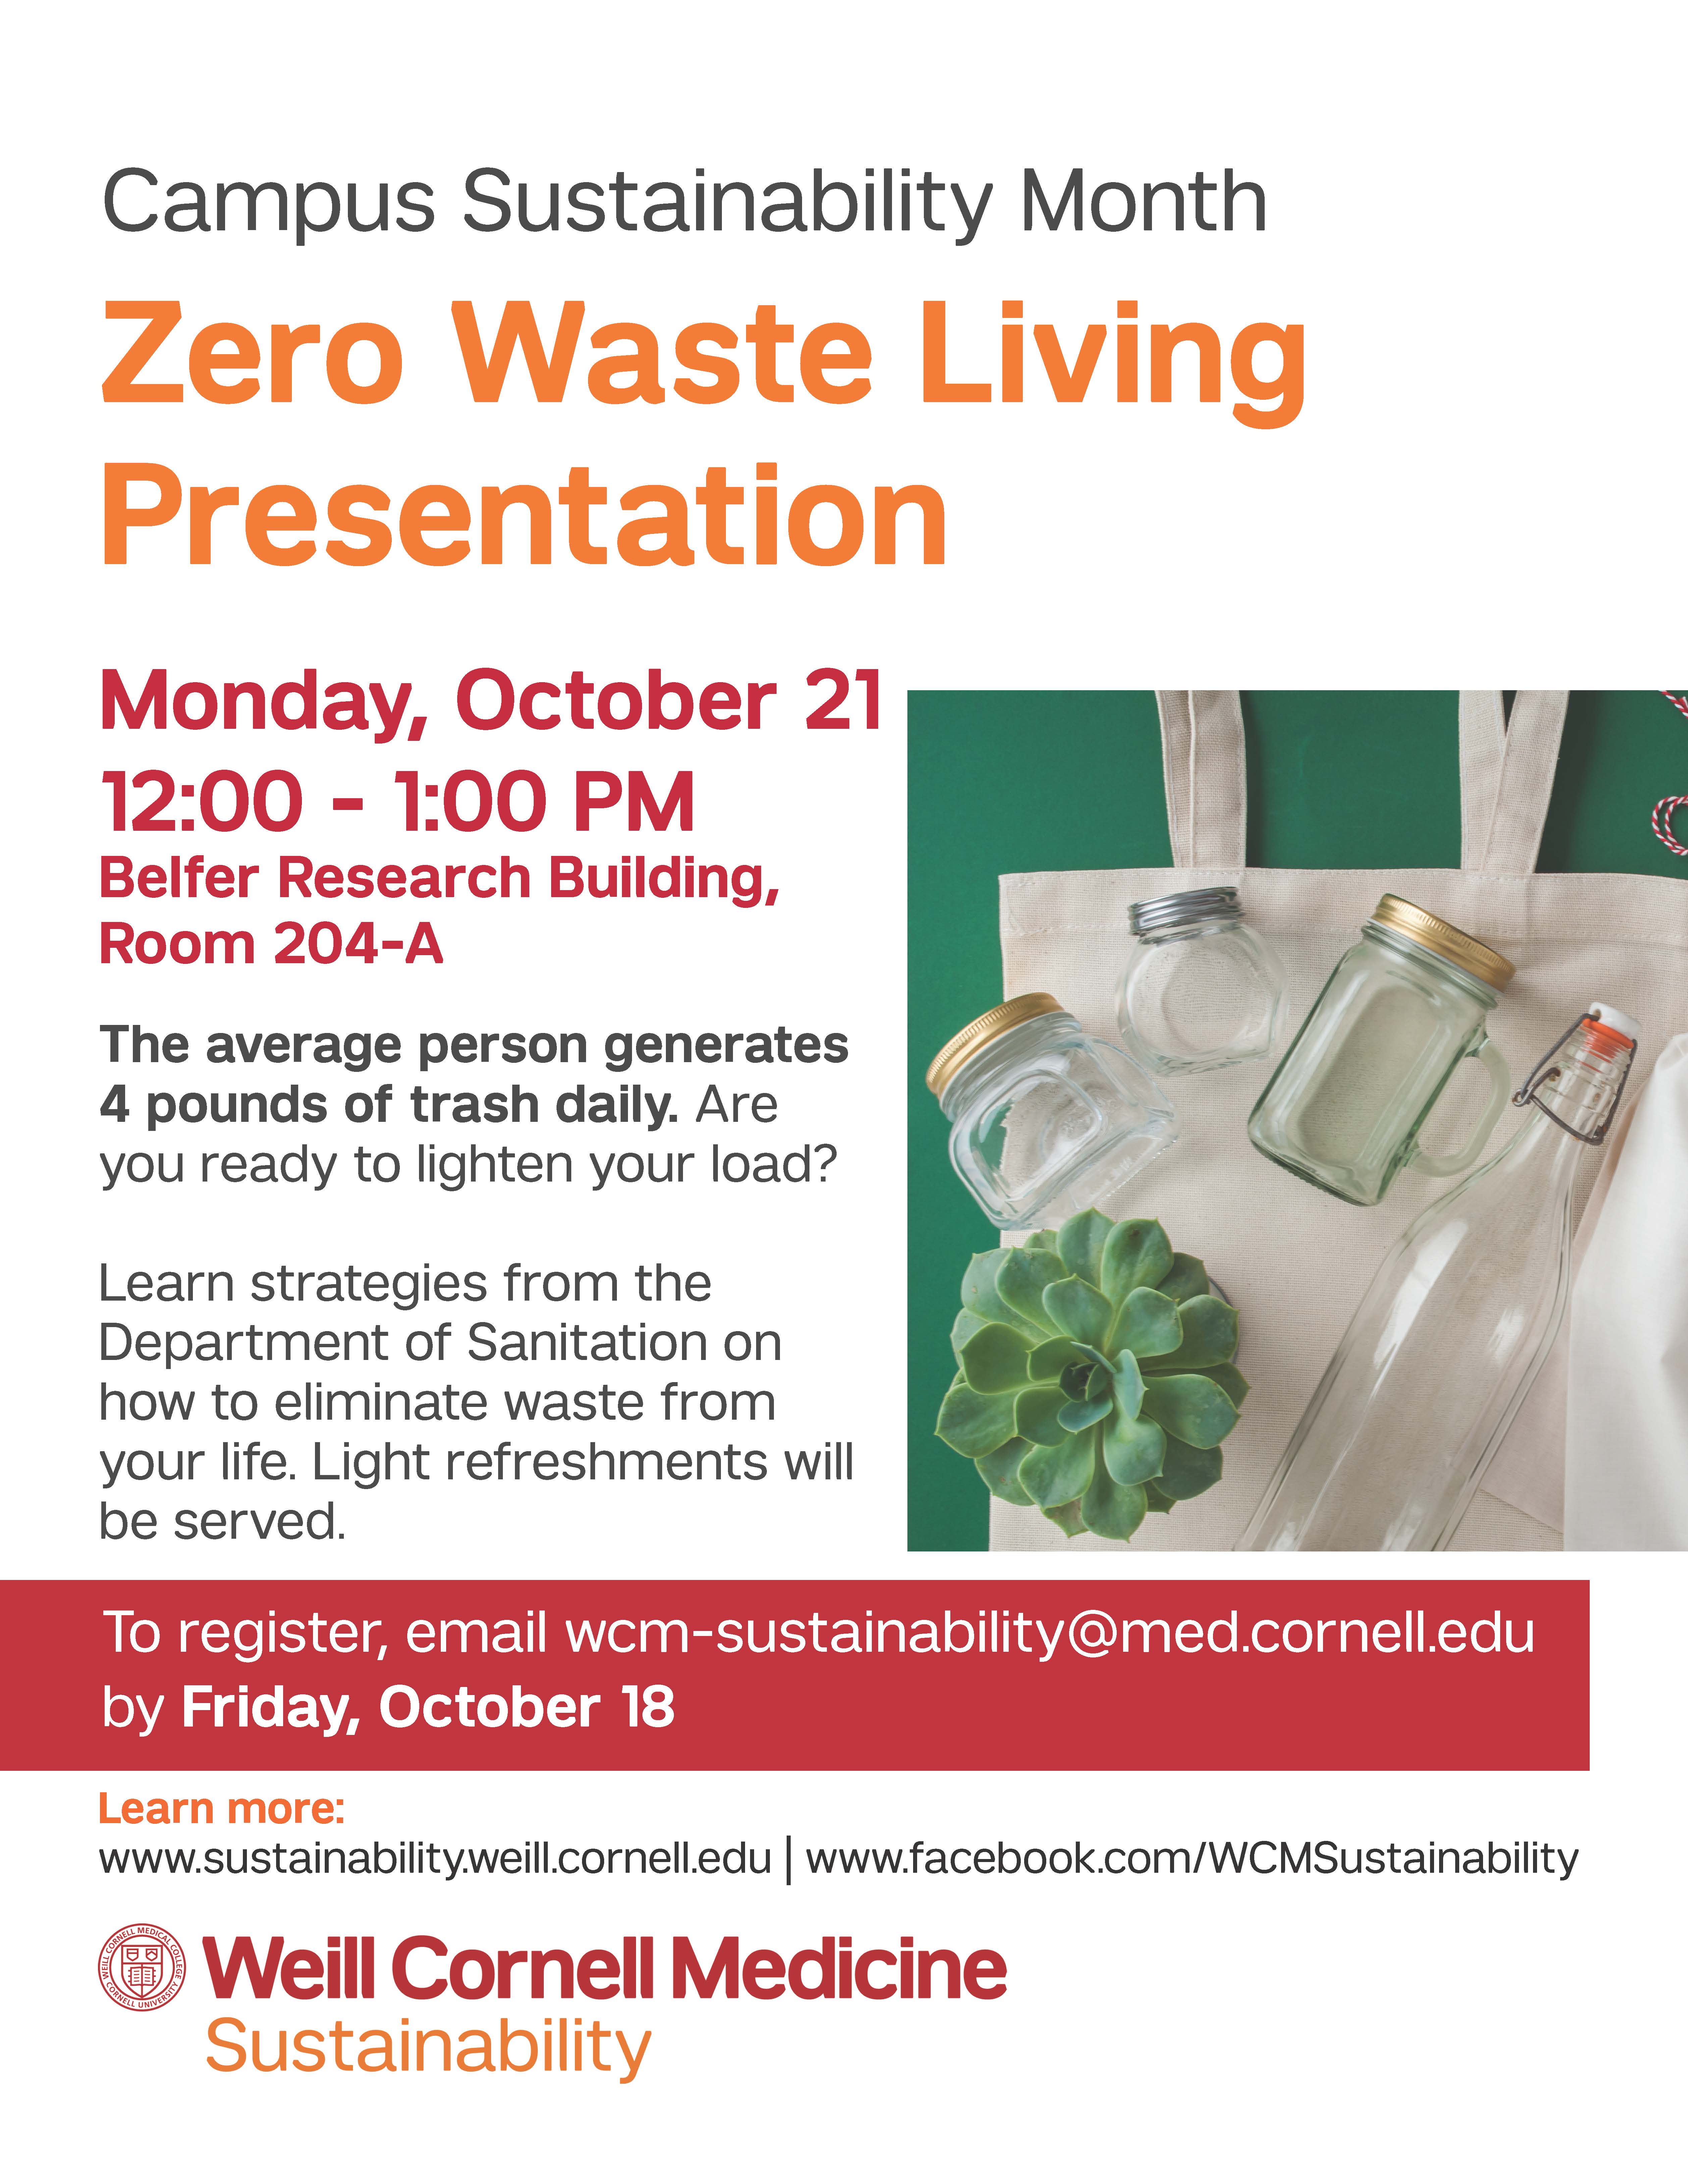 Zero Waste Living Presentation Poster